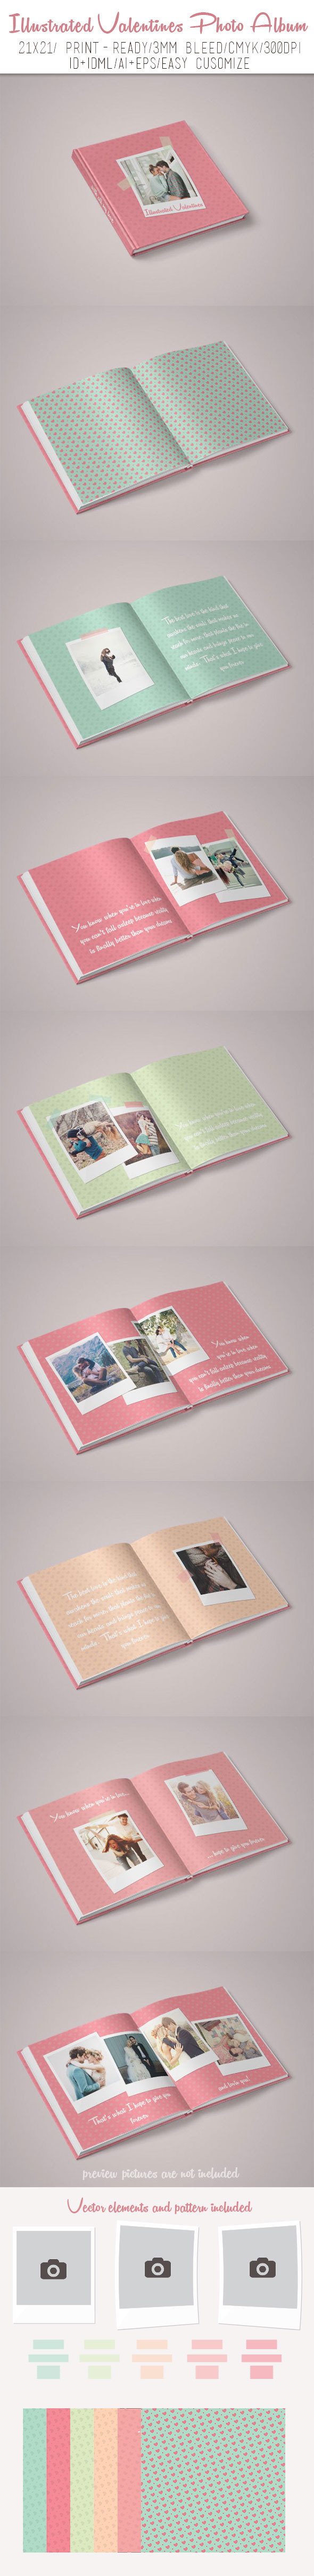 illustreted valentines photo Album template Layout memories couple Love pattern design InDesign print present gift